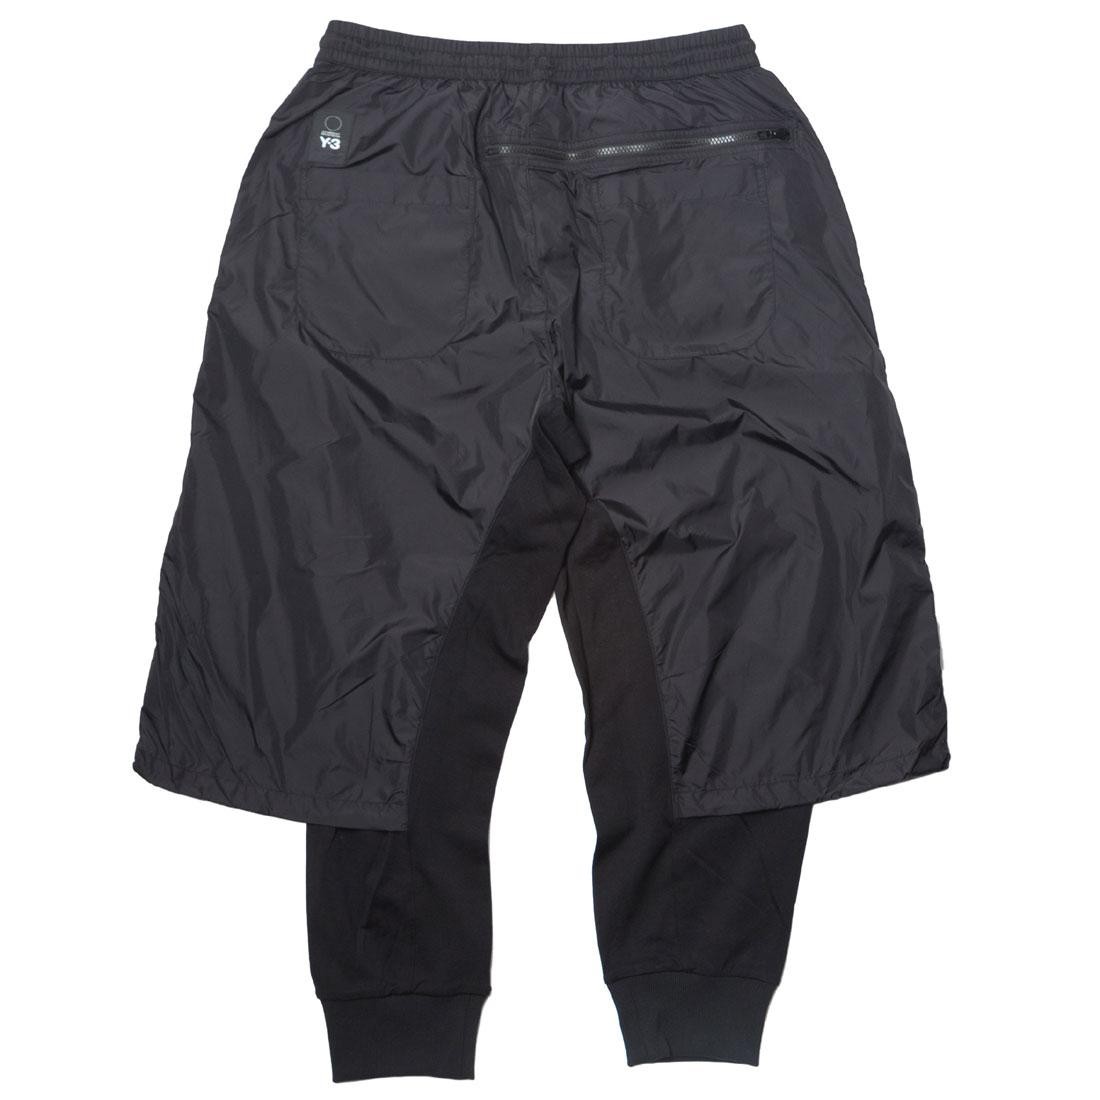 Adidas Y-3 Men Nylon Mix Track Pants black